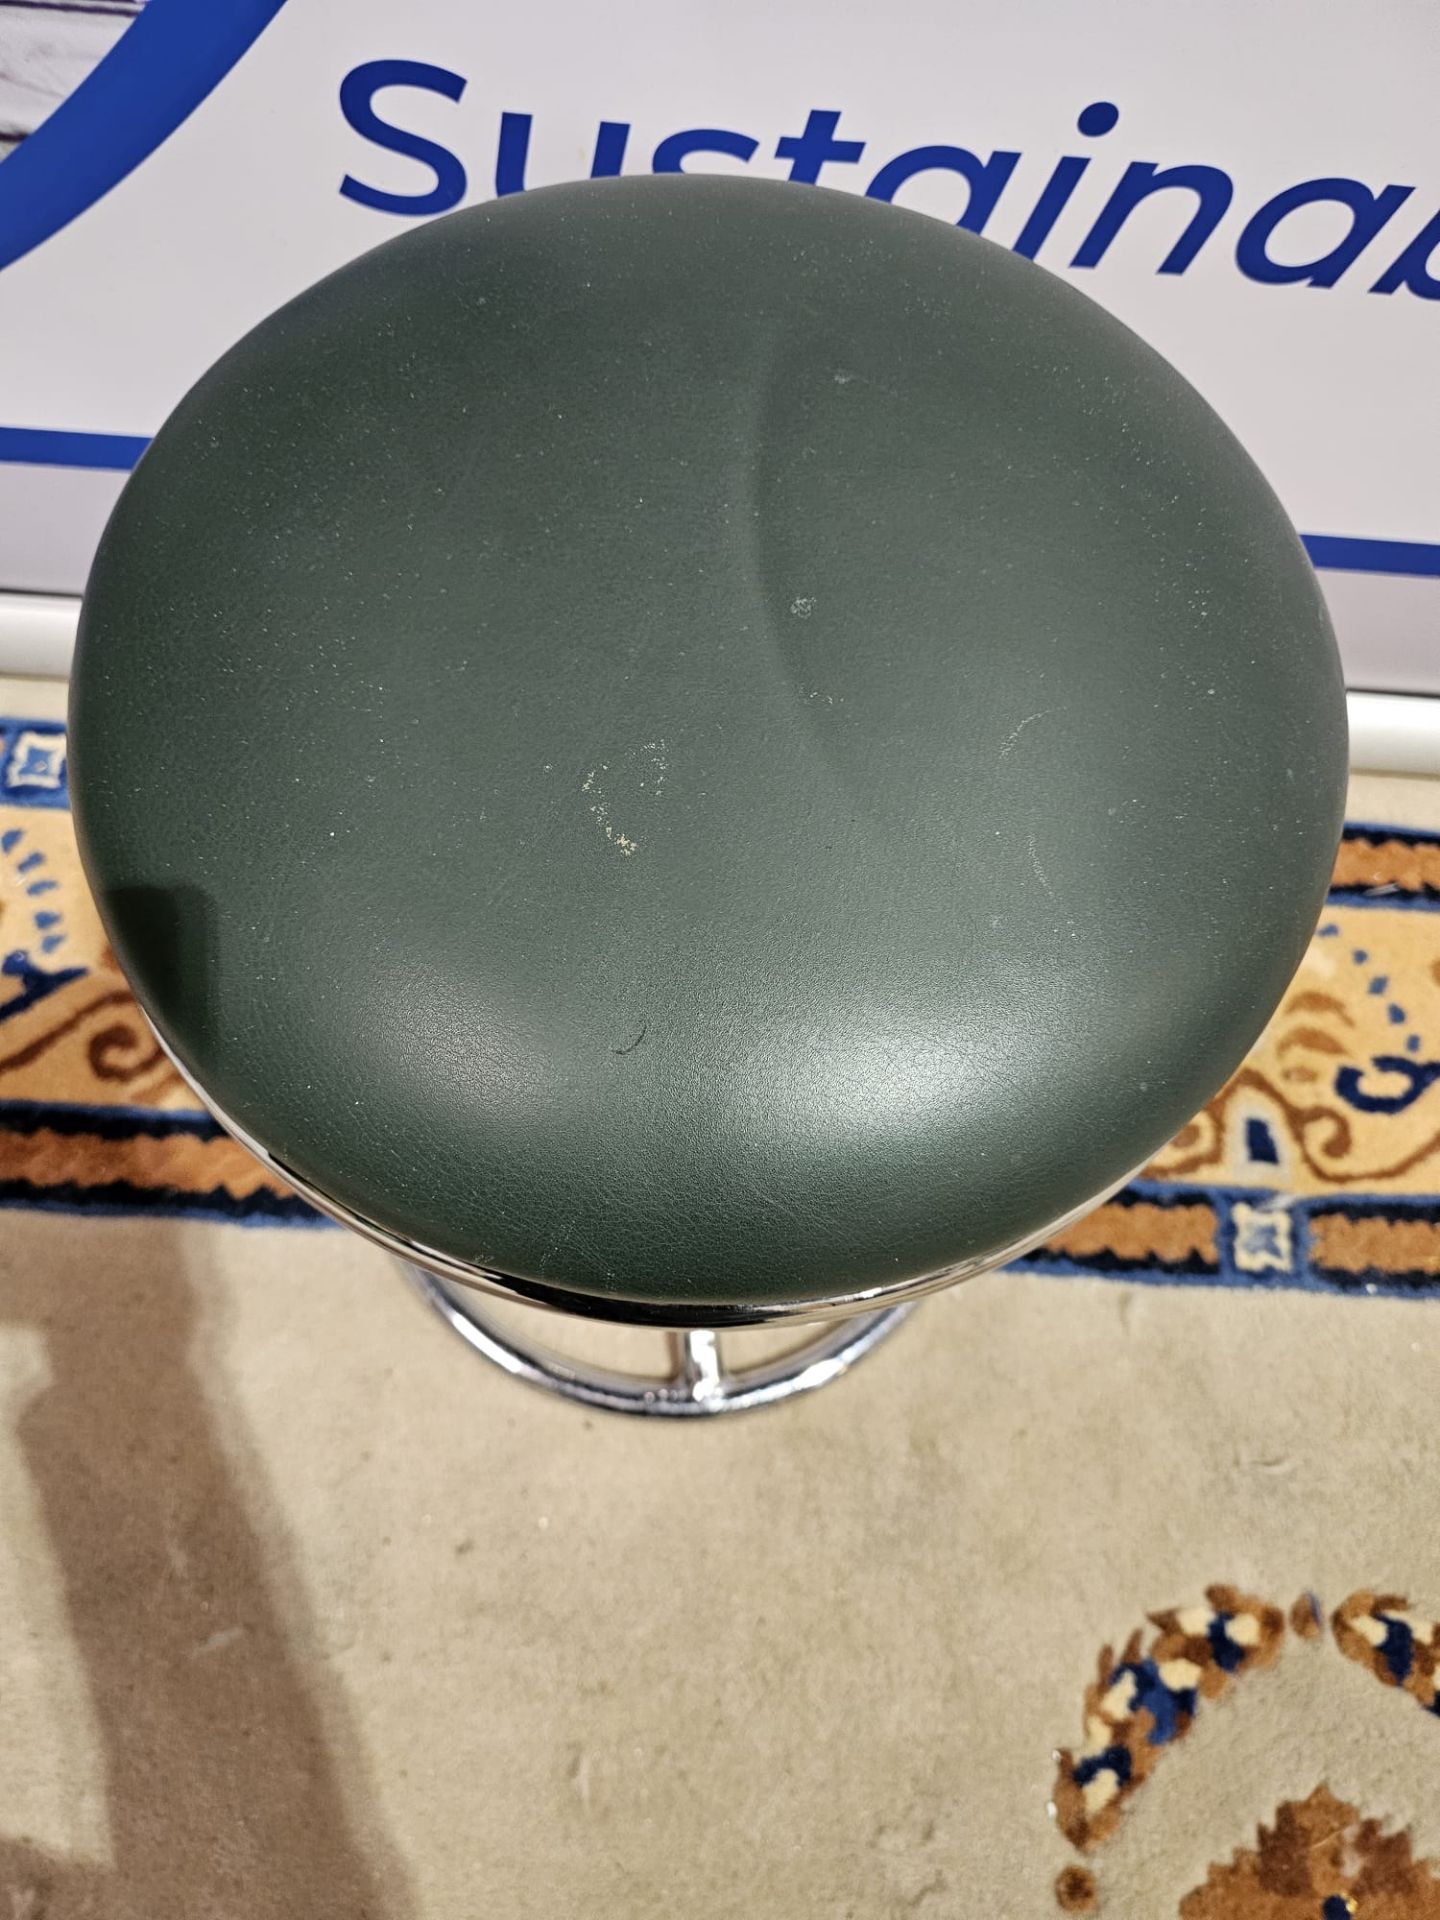 2 x Zoeftig Modern Chrome Vanity Stool Round Stool With greenVinyl Seat